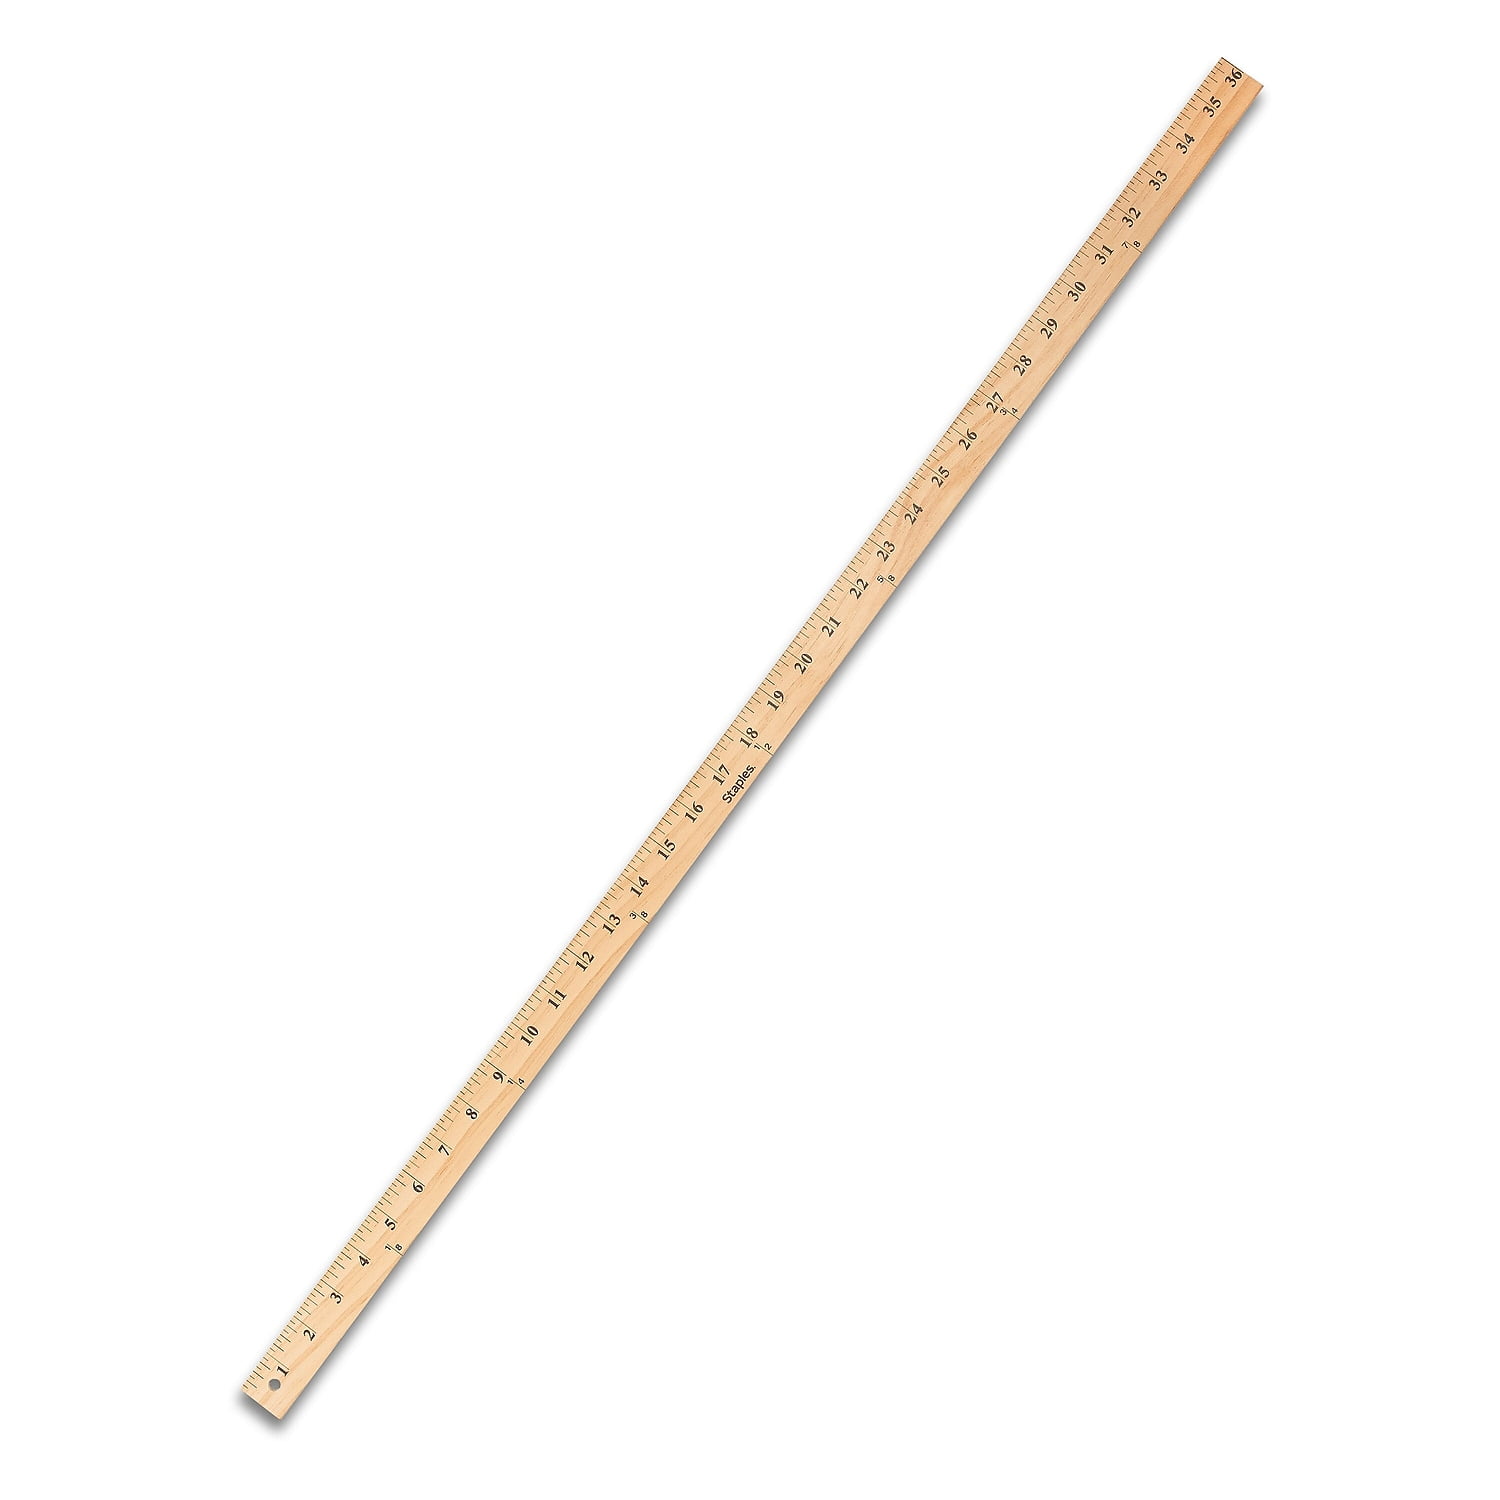 Staples Wood Yardstick 36 inch (51893) 2773007